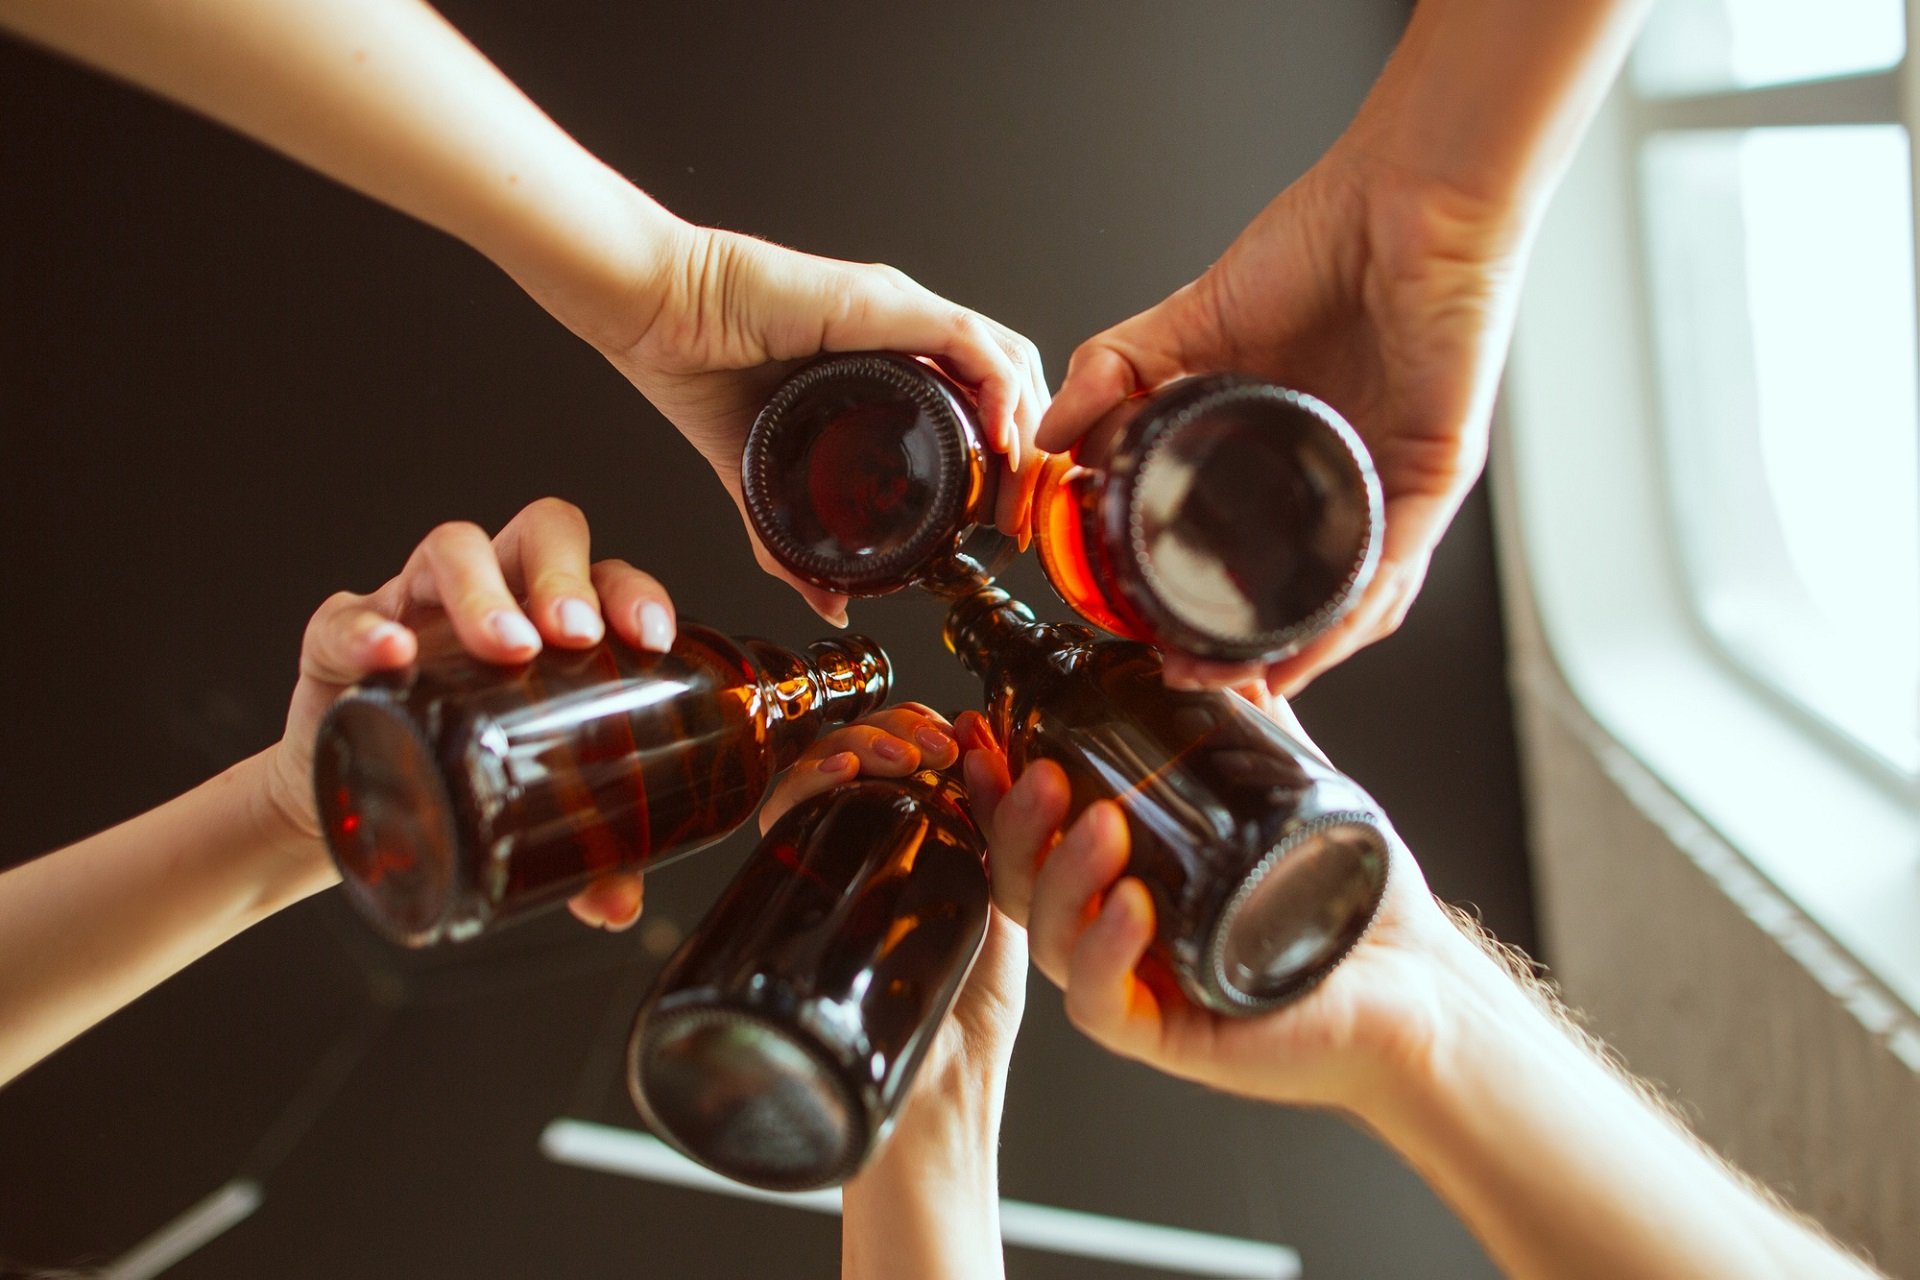 Is Binge Drinking Bad?